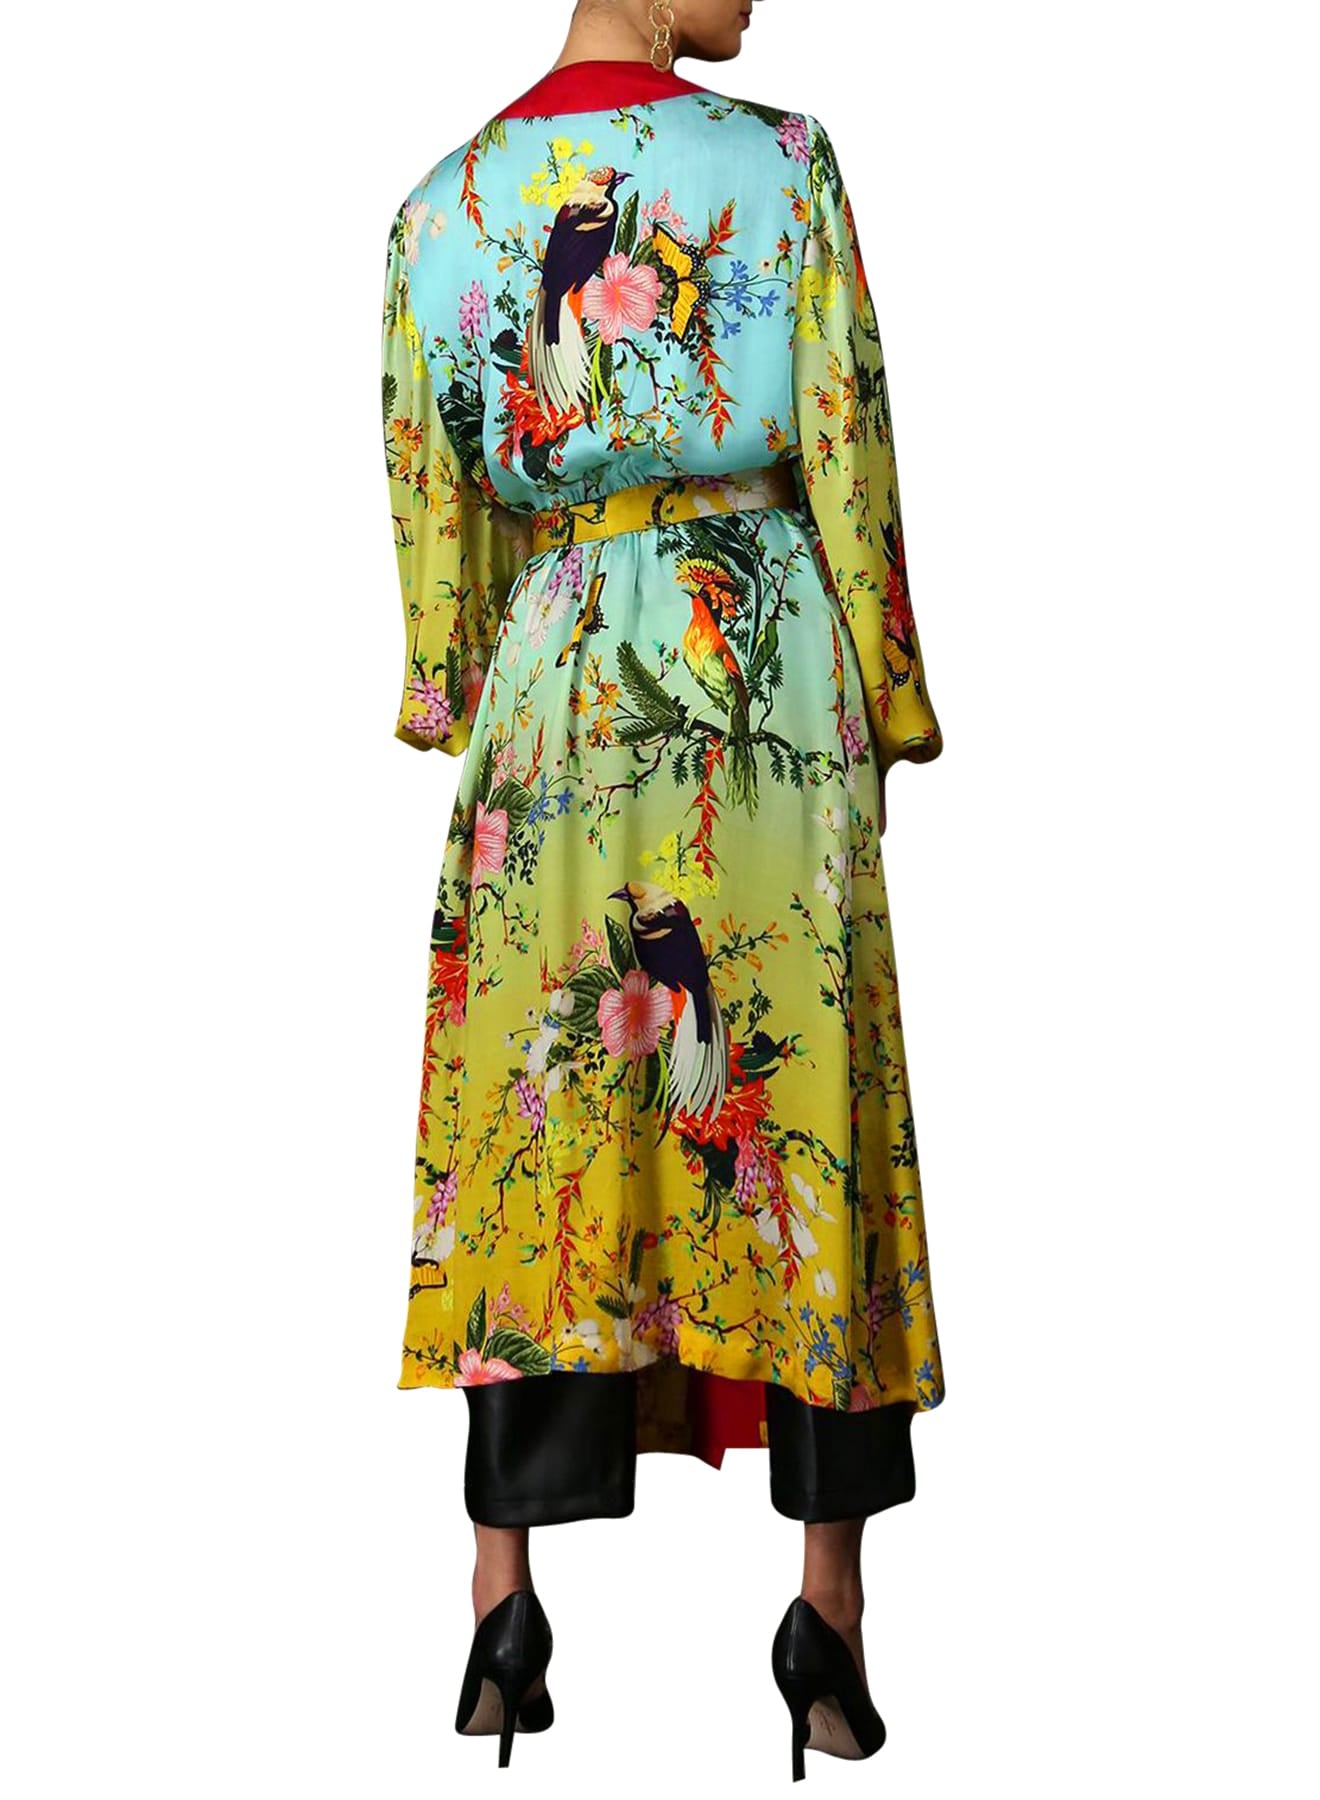 "Kyle X Shahida" "green silk robe" "womens long kimono robe" "silk yellow robe" "plus size kimono" "womens long kimono"